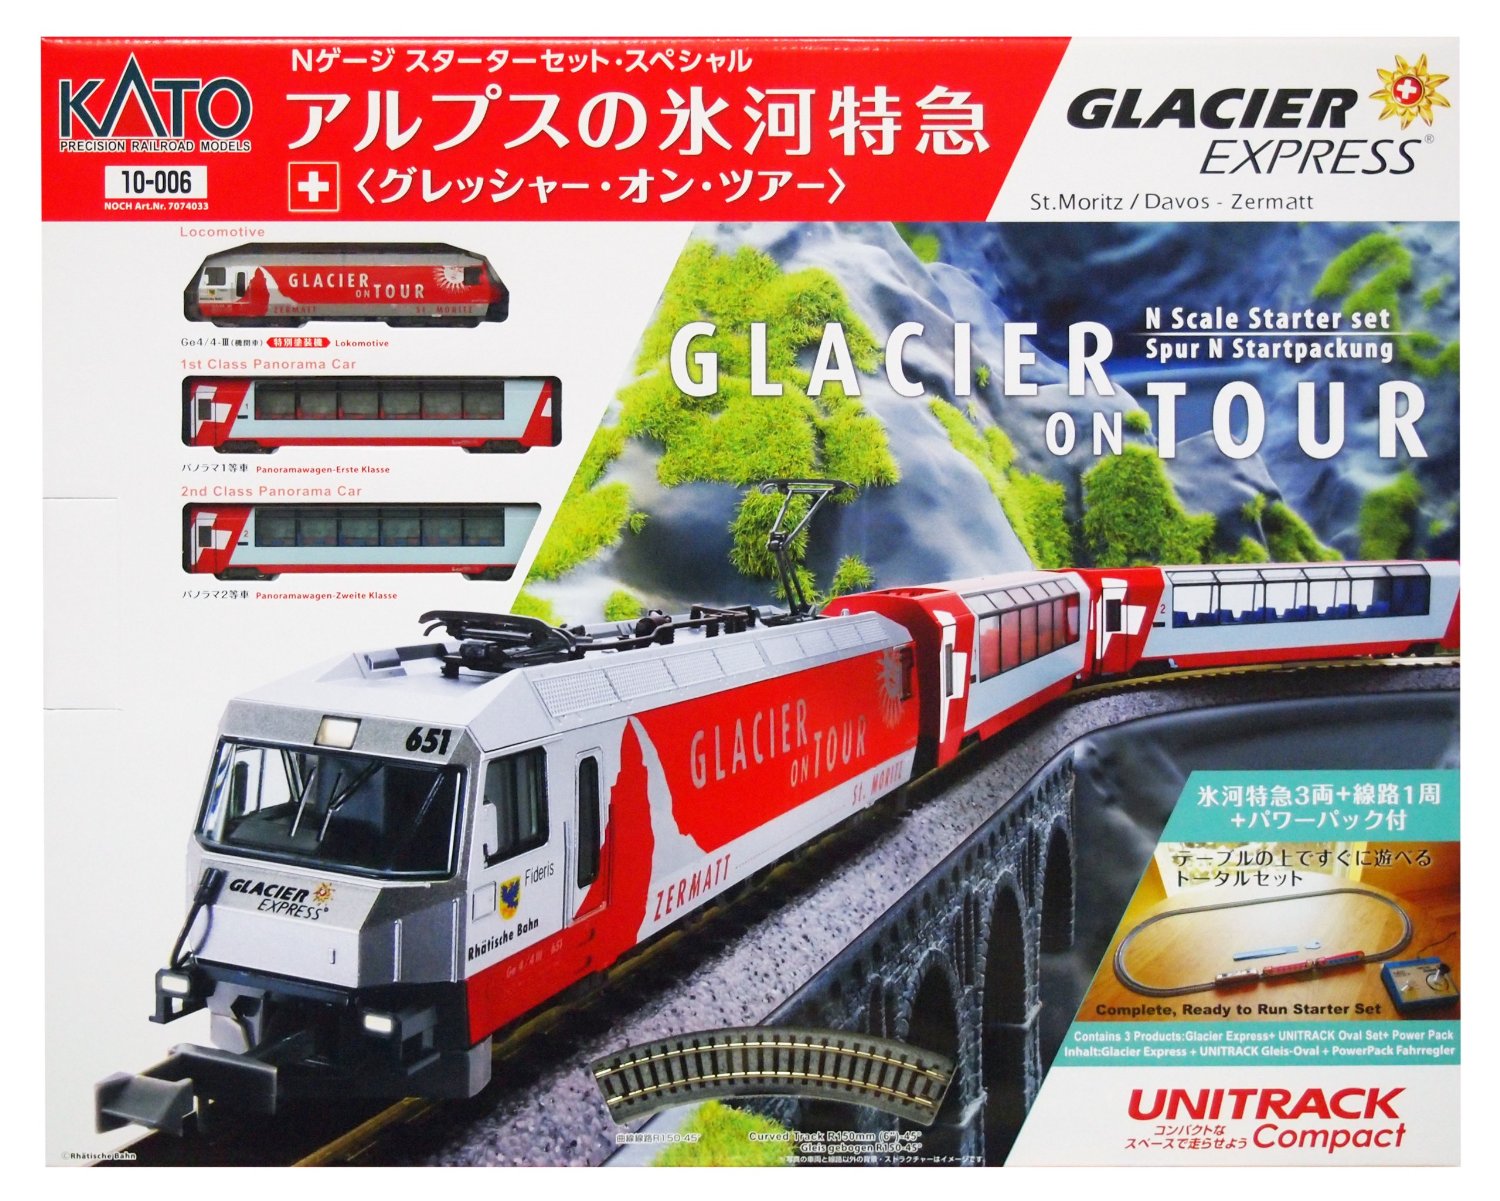 10-006 Starter Set SP Alps Glacier Train : Glacier on Tour